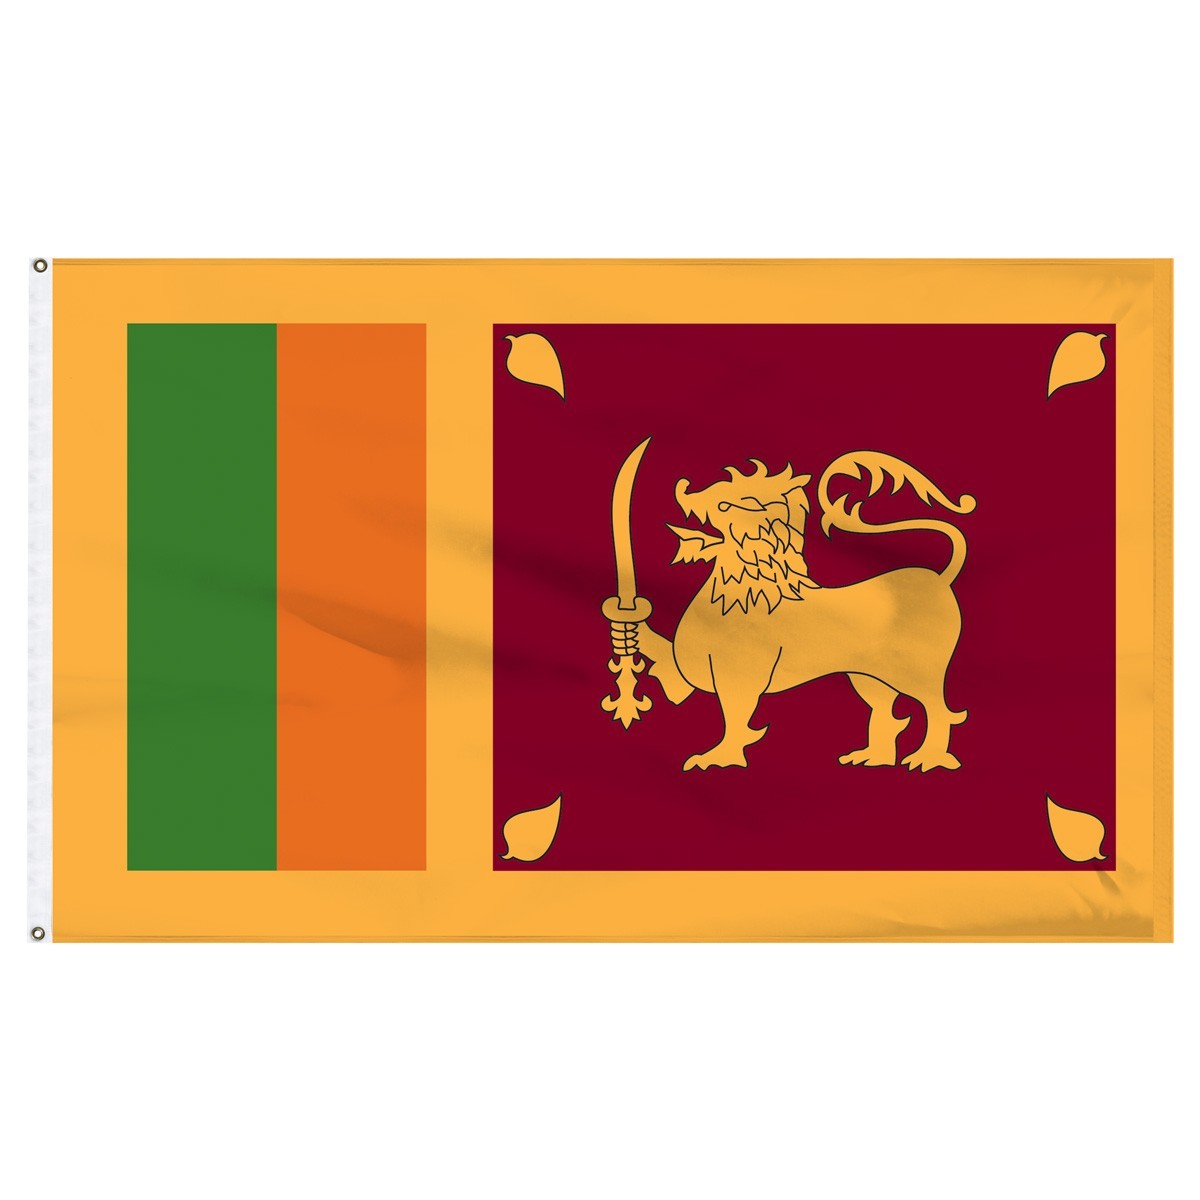 Sri Lanka 2' x 3' Outdoor Nylon Flag